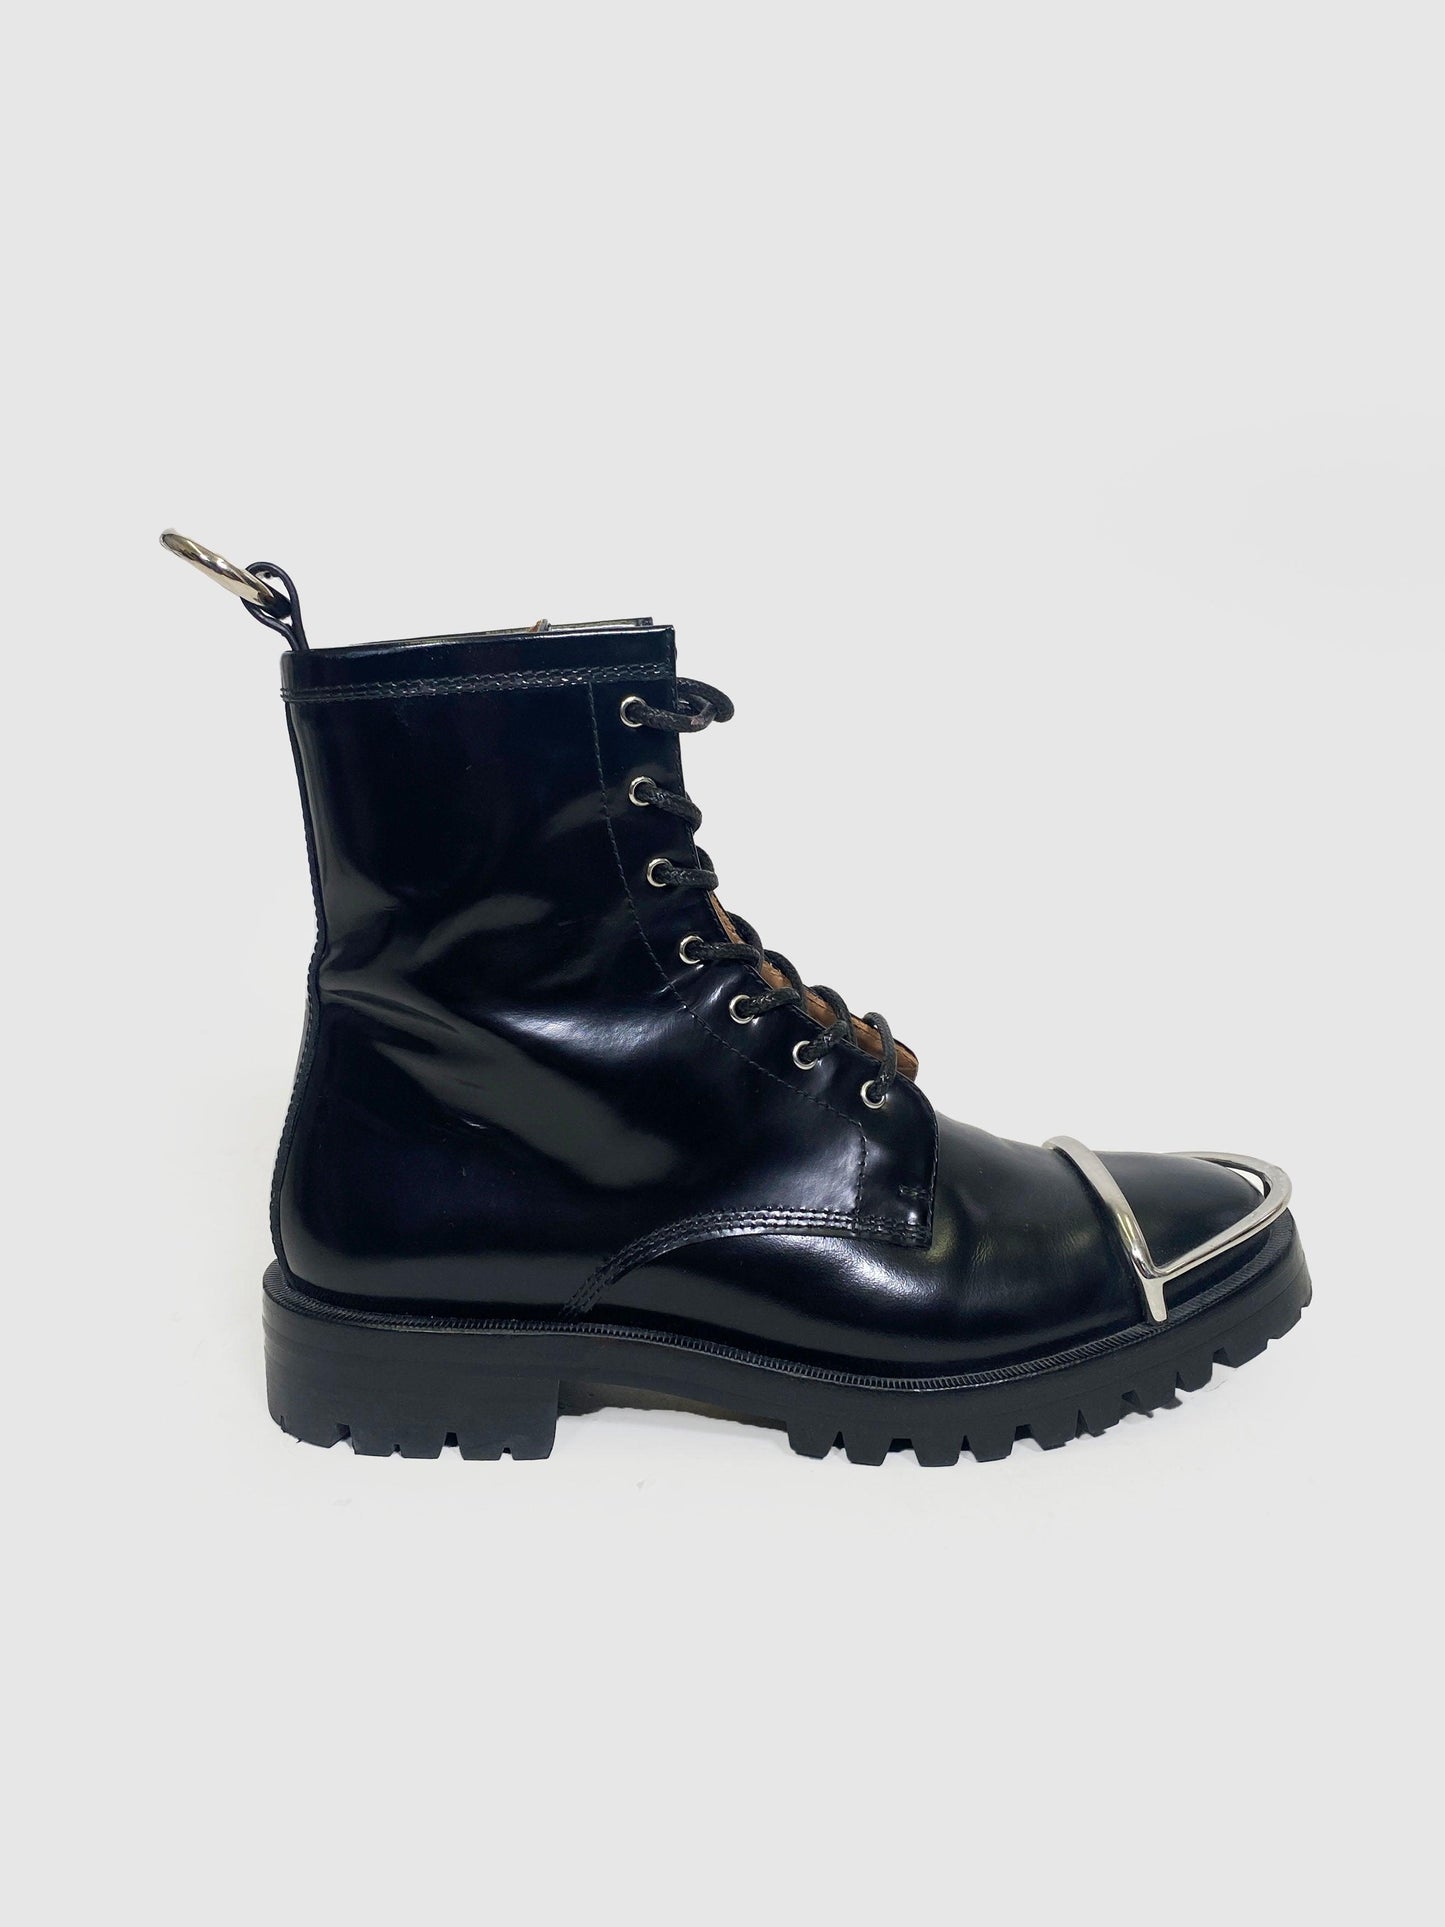 Alexander Wang Black Patent Leather Lyndon Combat Boots